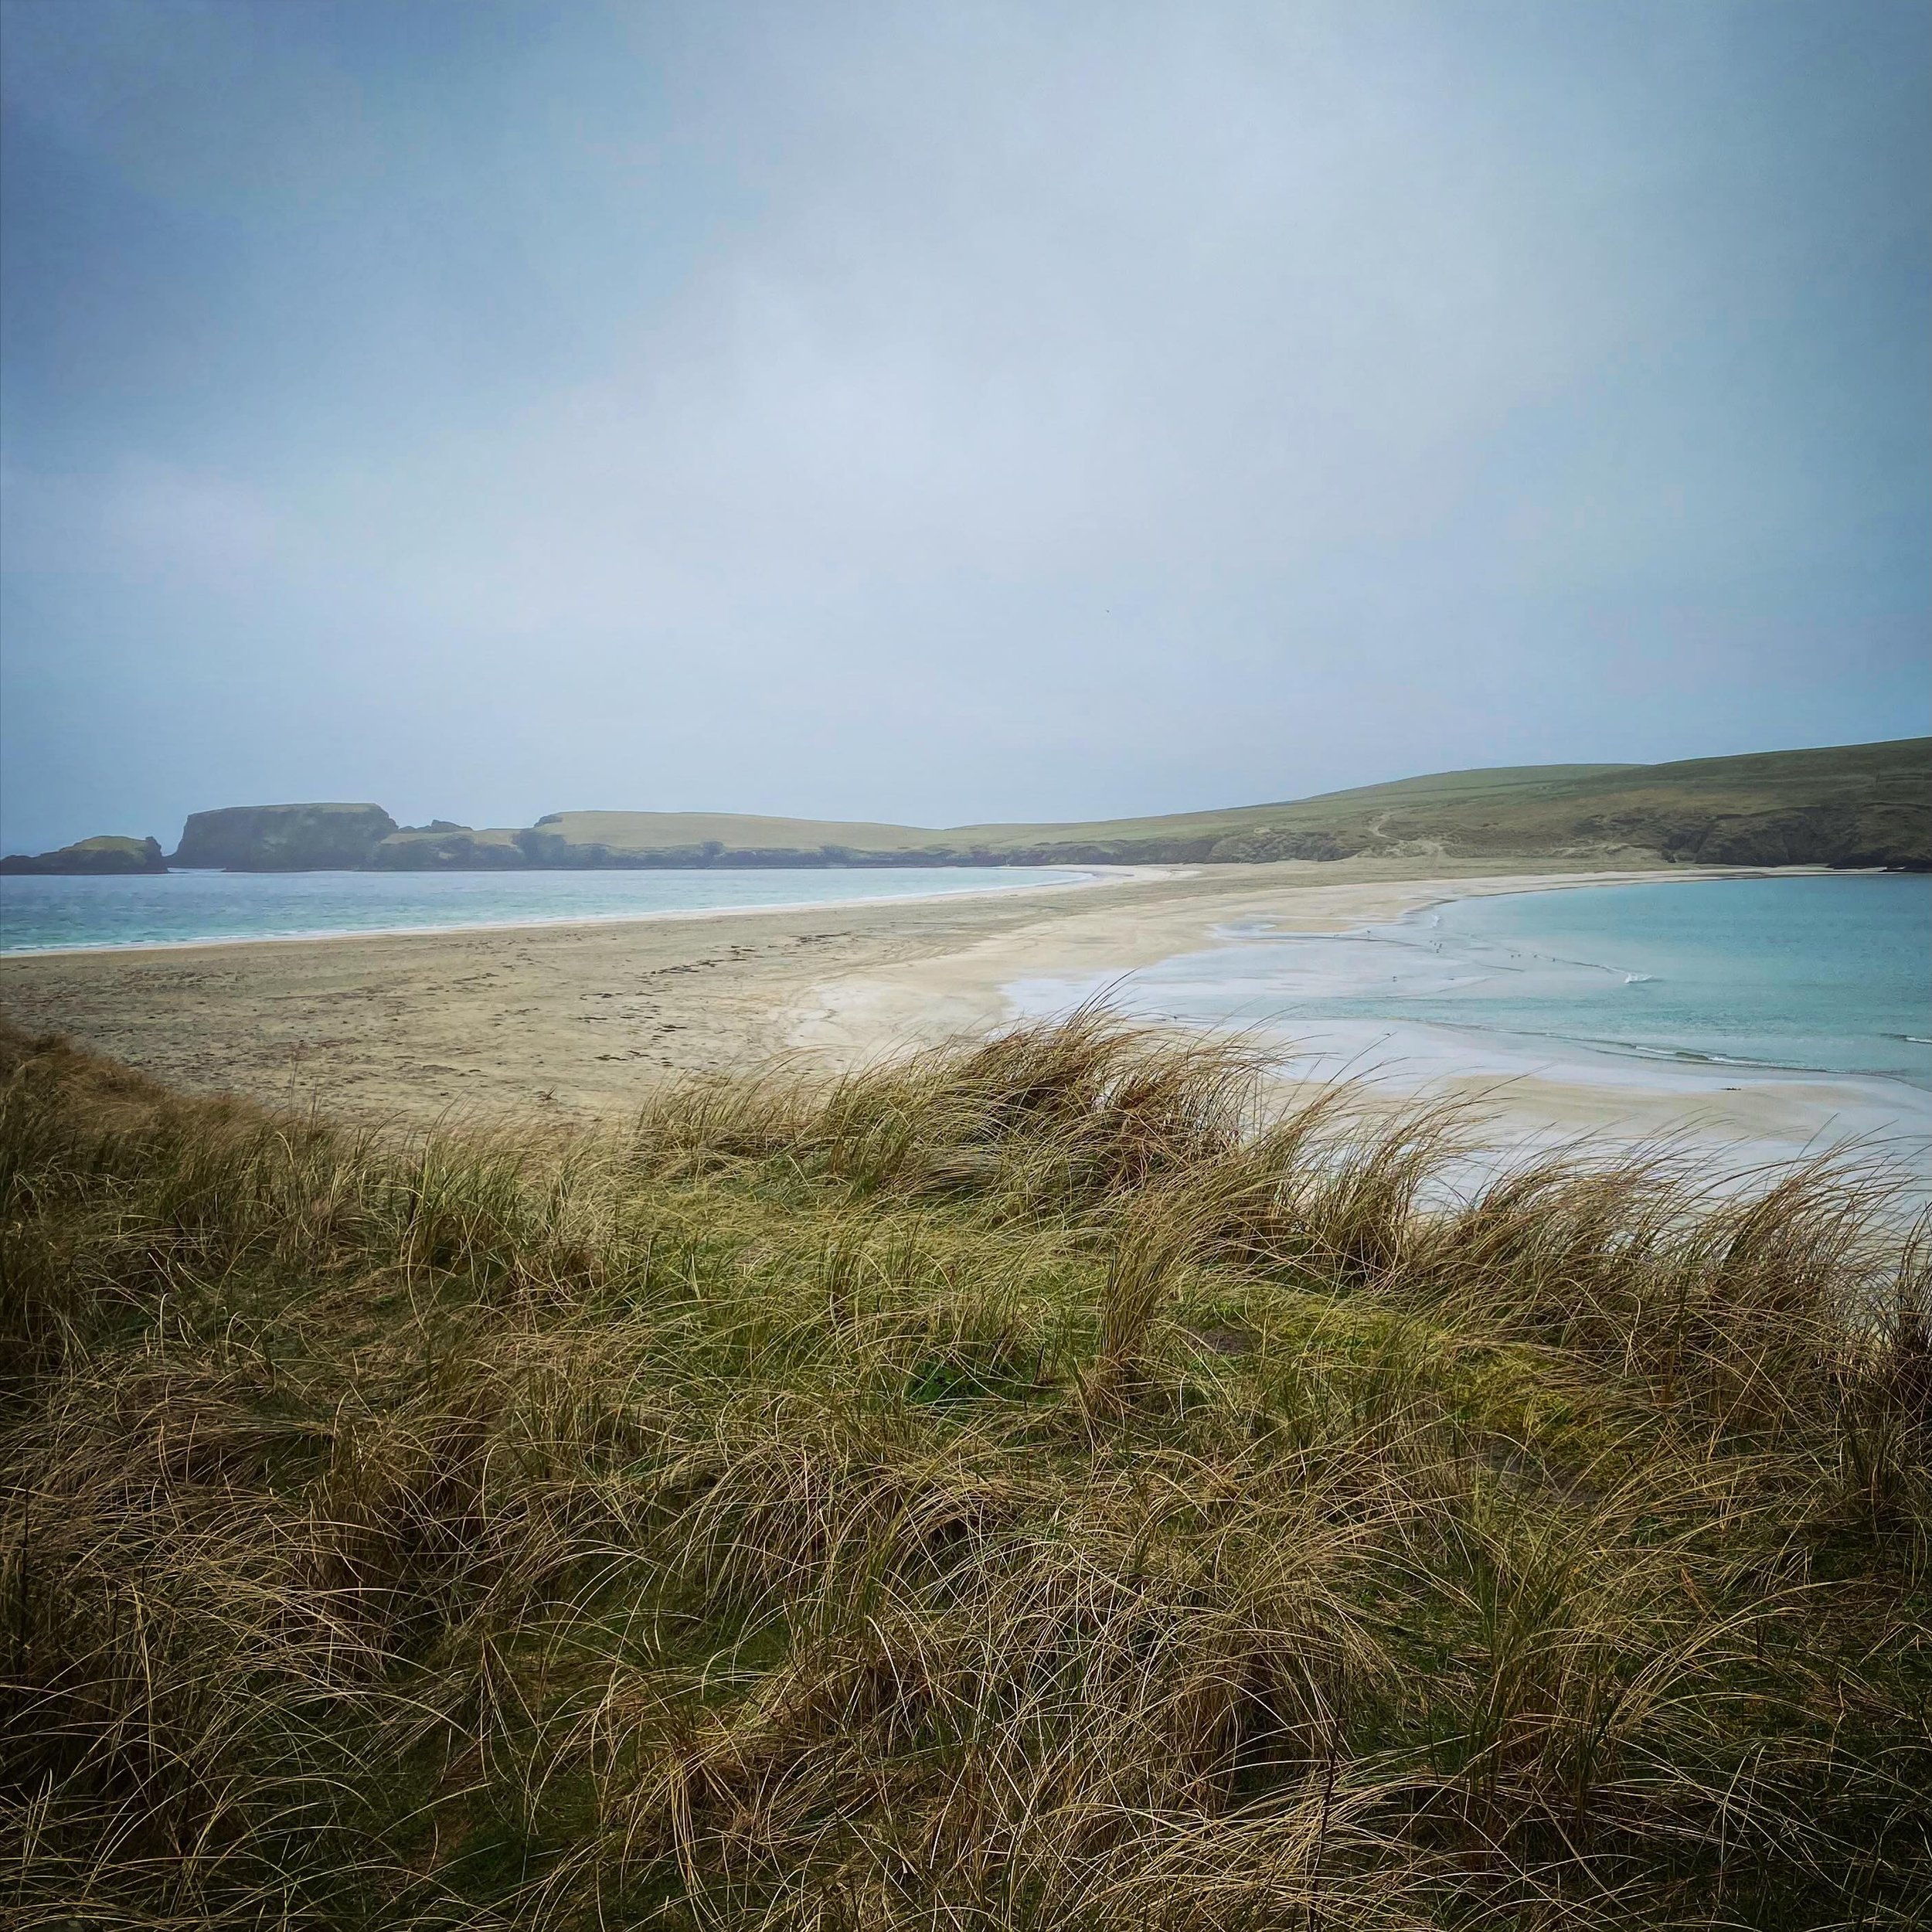 Tombolo. #padeapix #stniniansisle #stninians #beach #tombolo #shetland #northernisles #landscapephotography